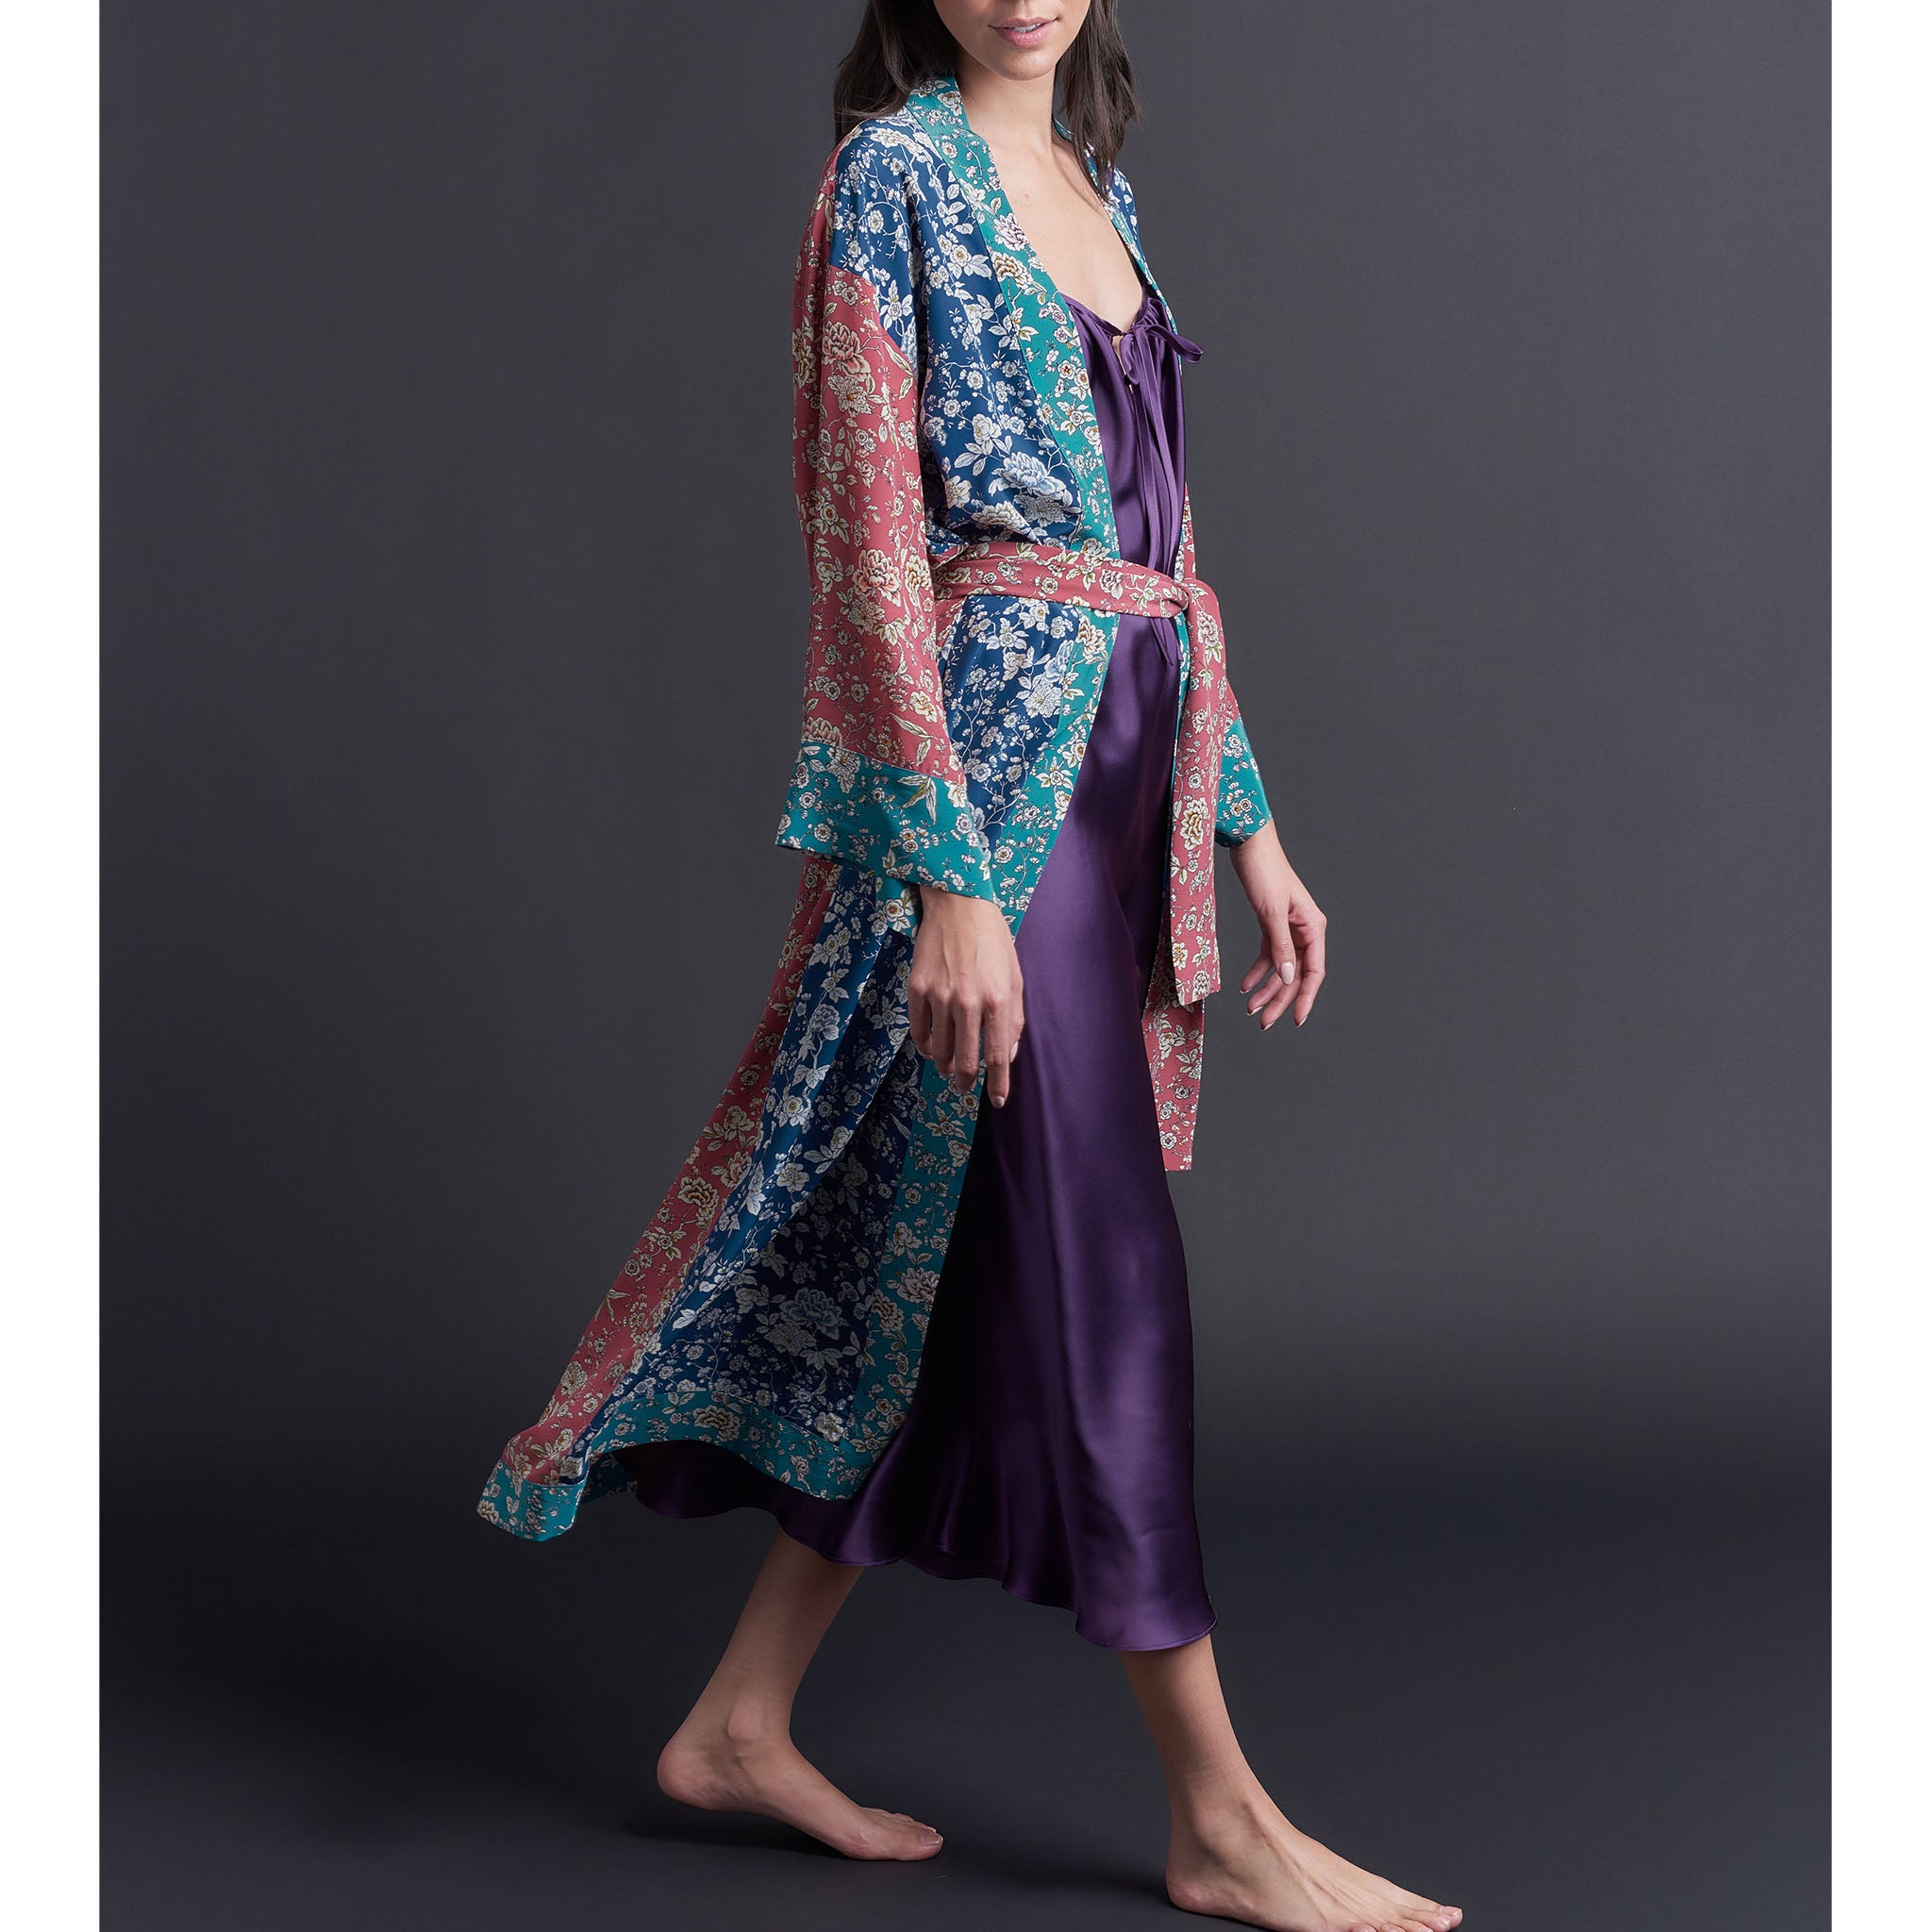 Paneled Slip Dress in Violet Bias Silk Charmeuse